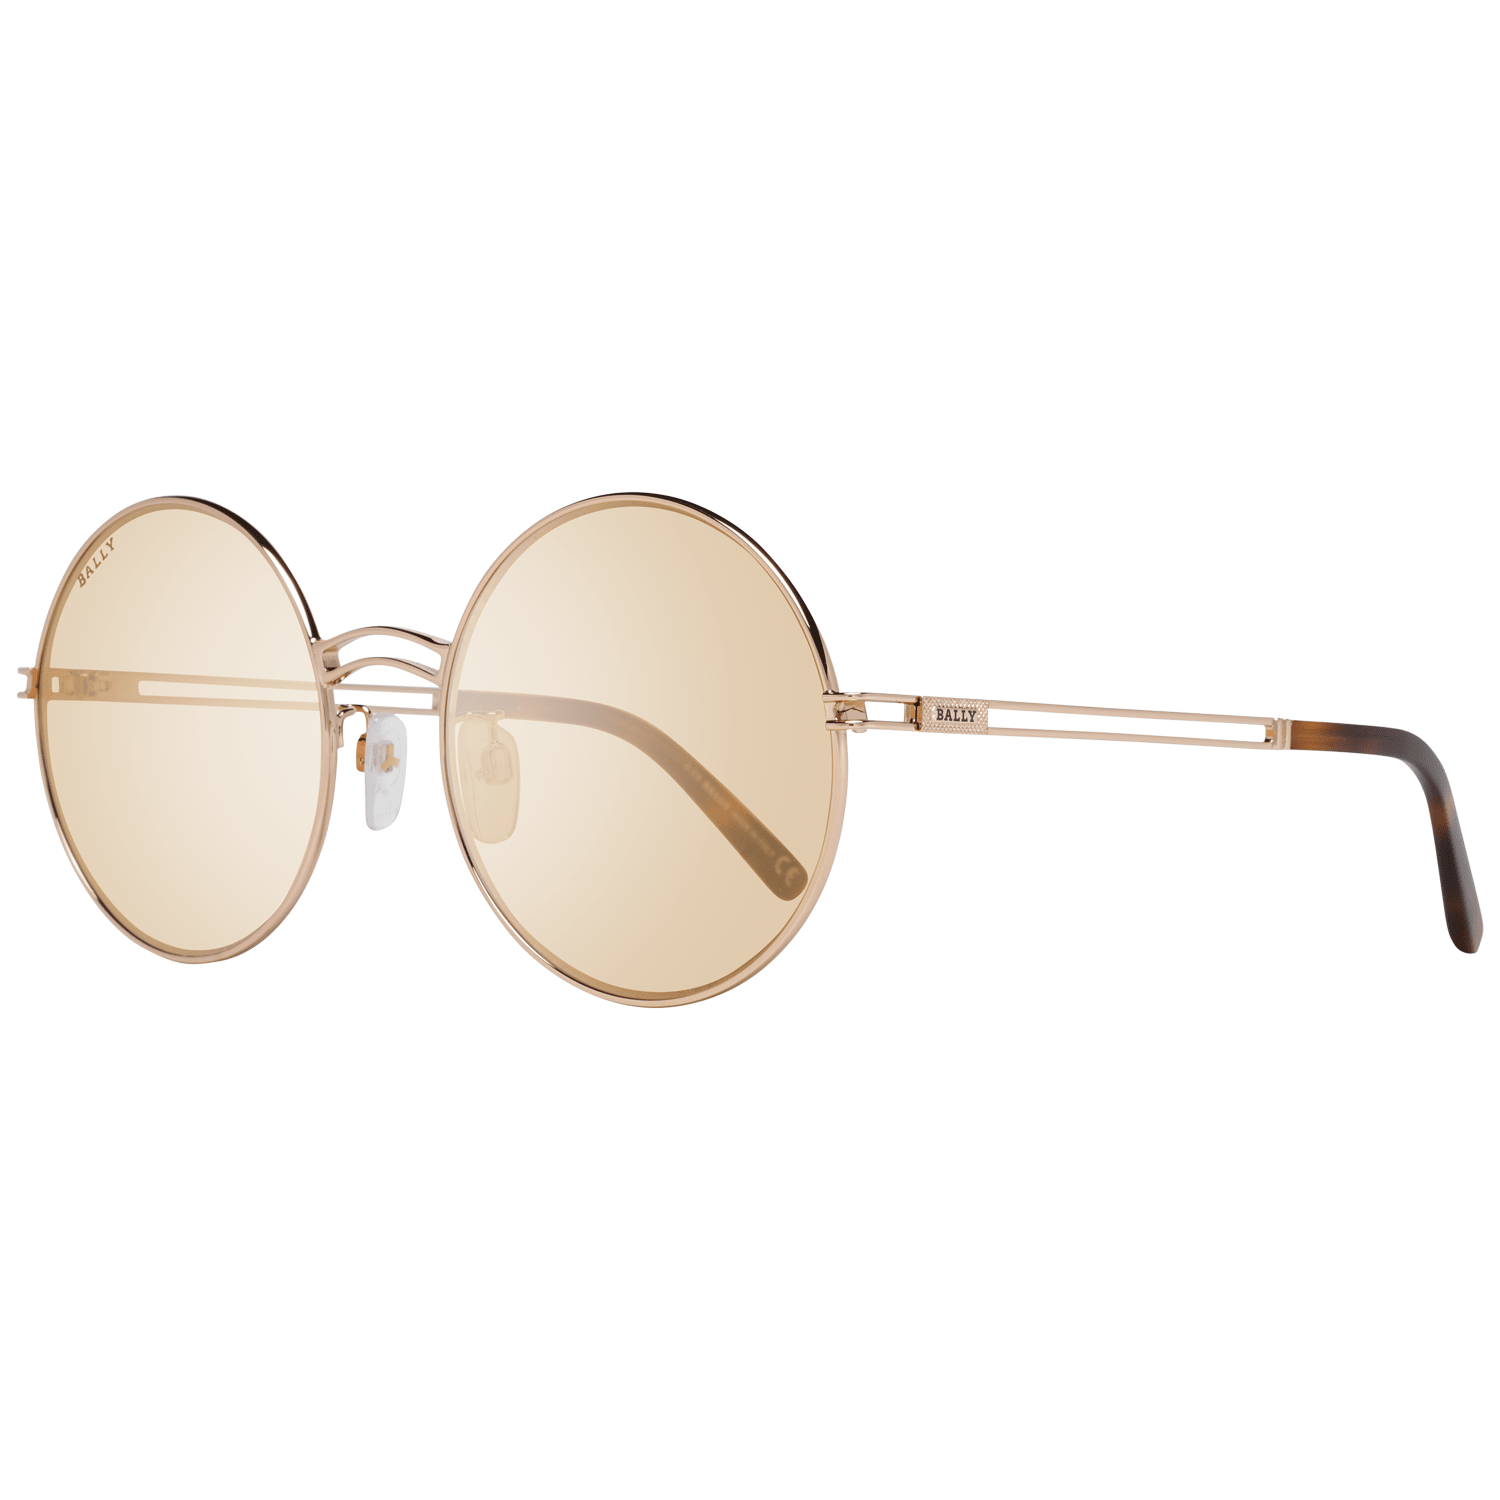 Bally Round Frame Sunglasses – Cettire